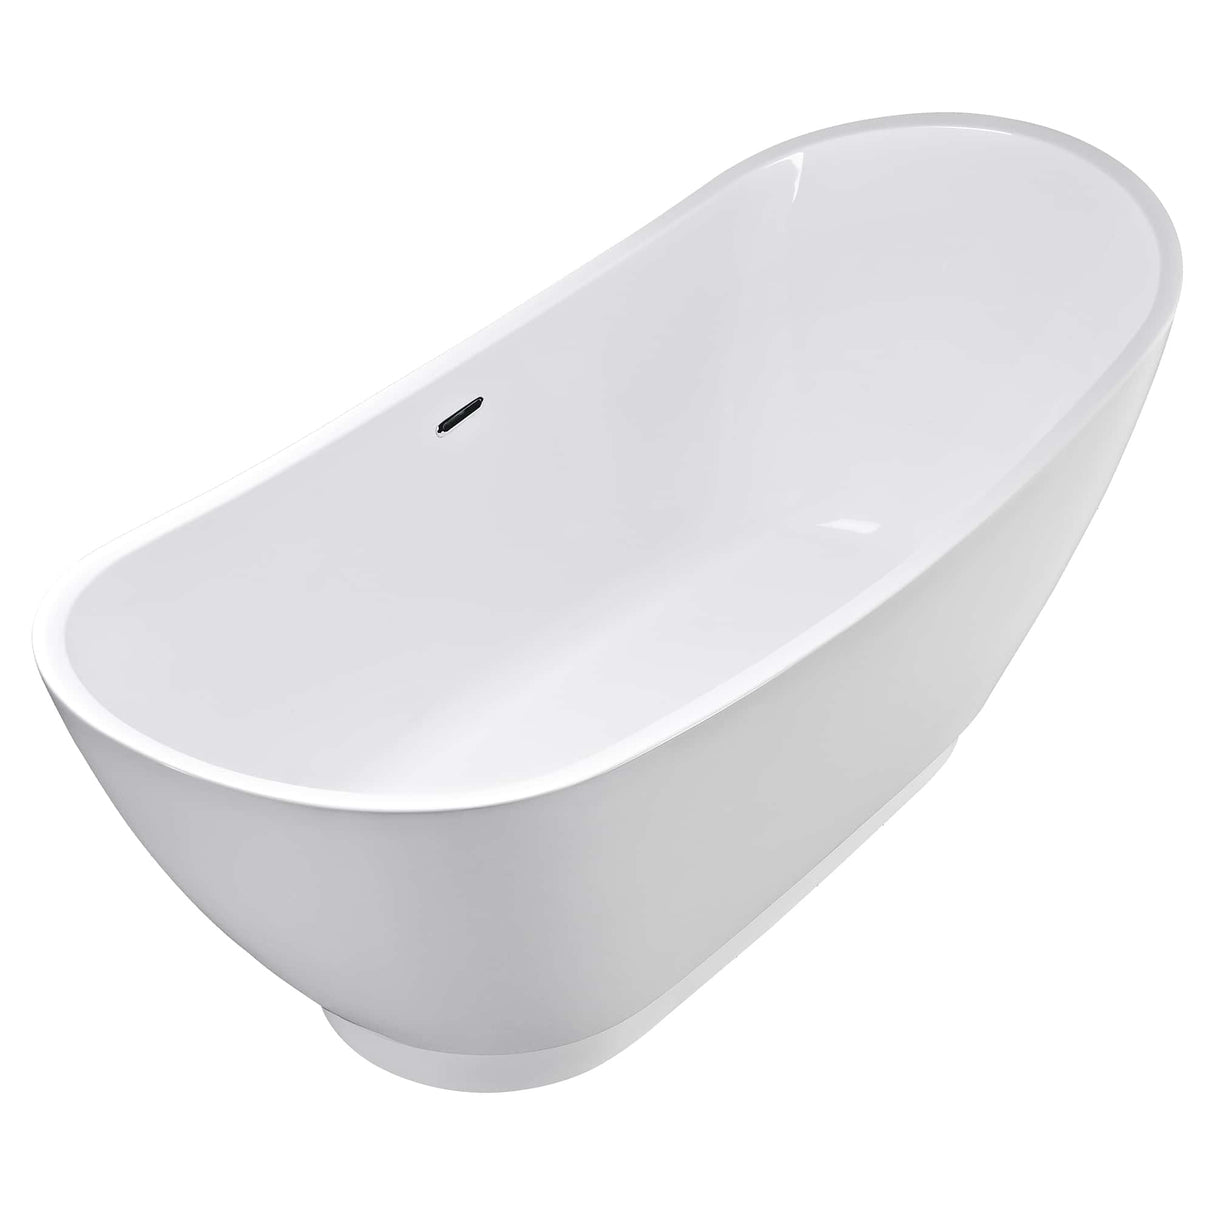 Empava-69FT1603 luxury freestanding acrylic soaking oval modern white SPA double-ended bathtub over flow